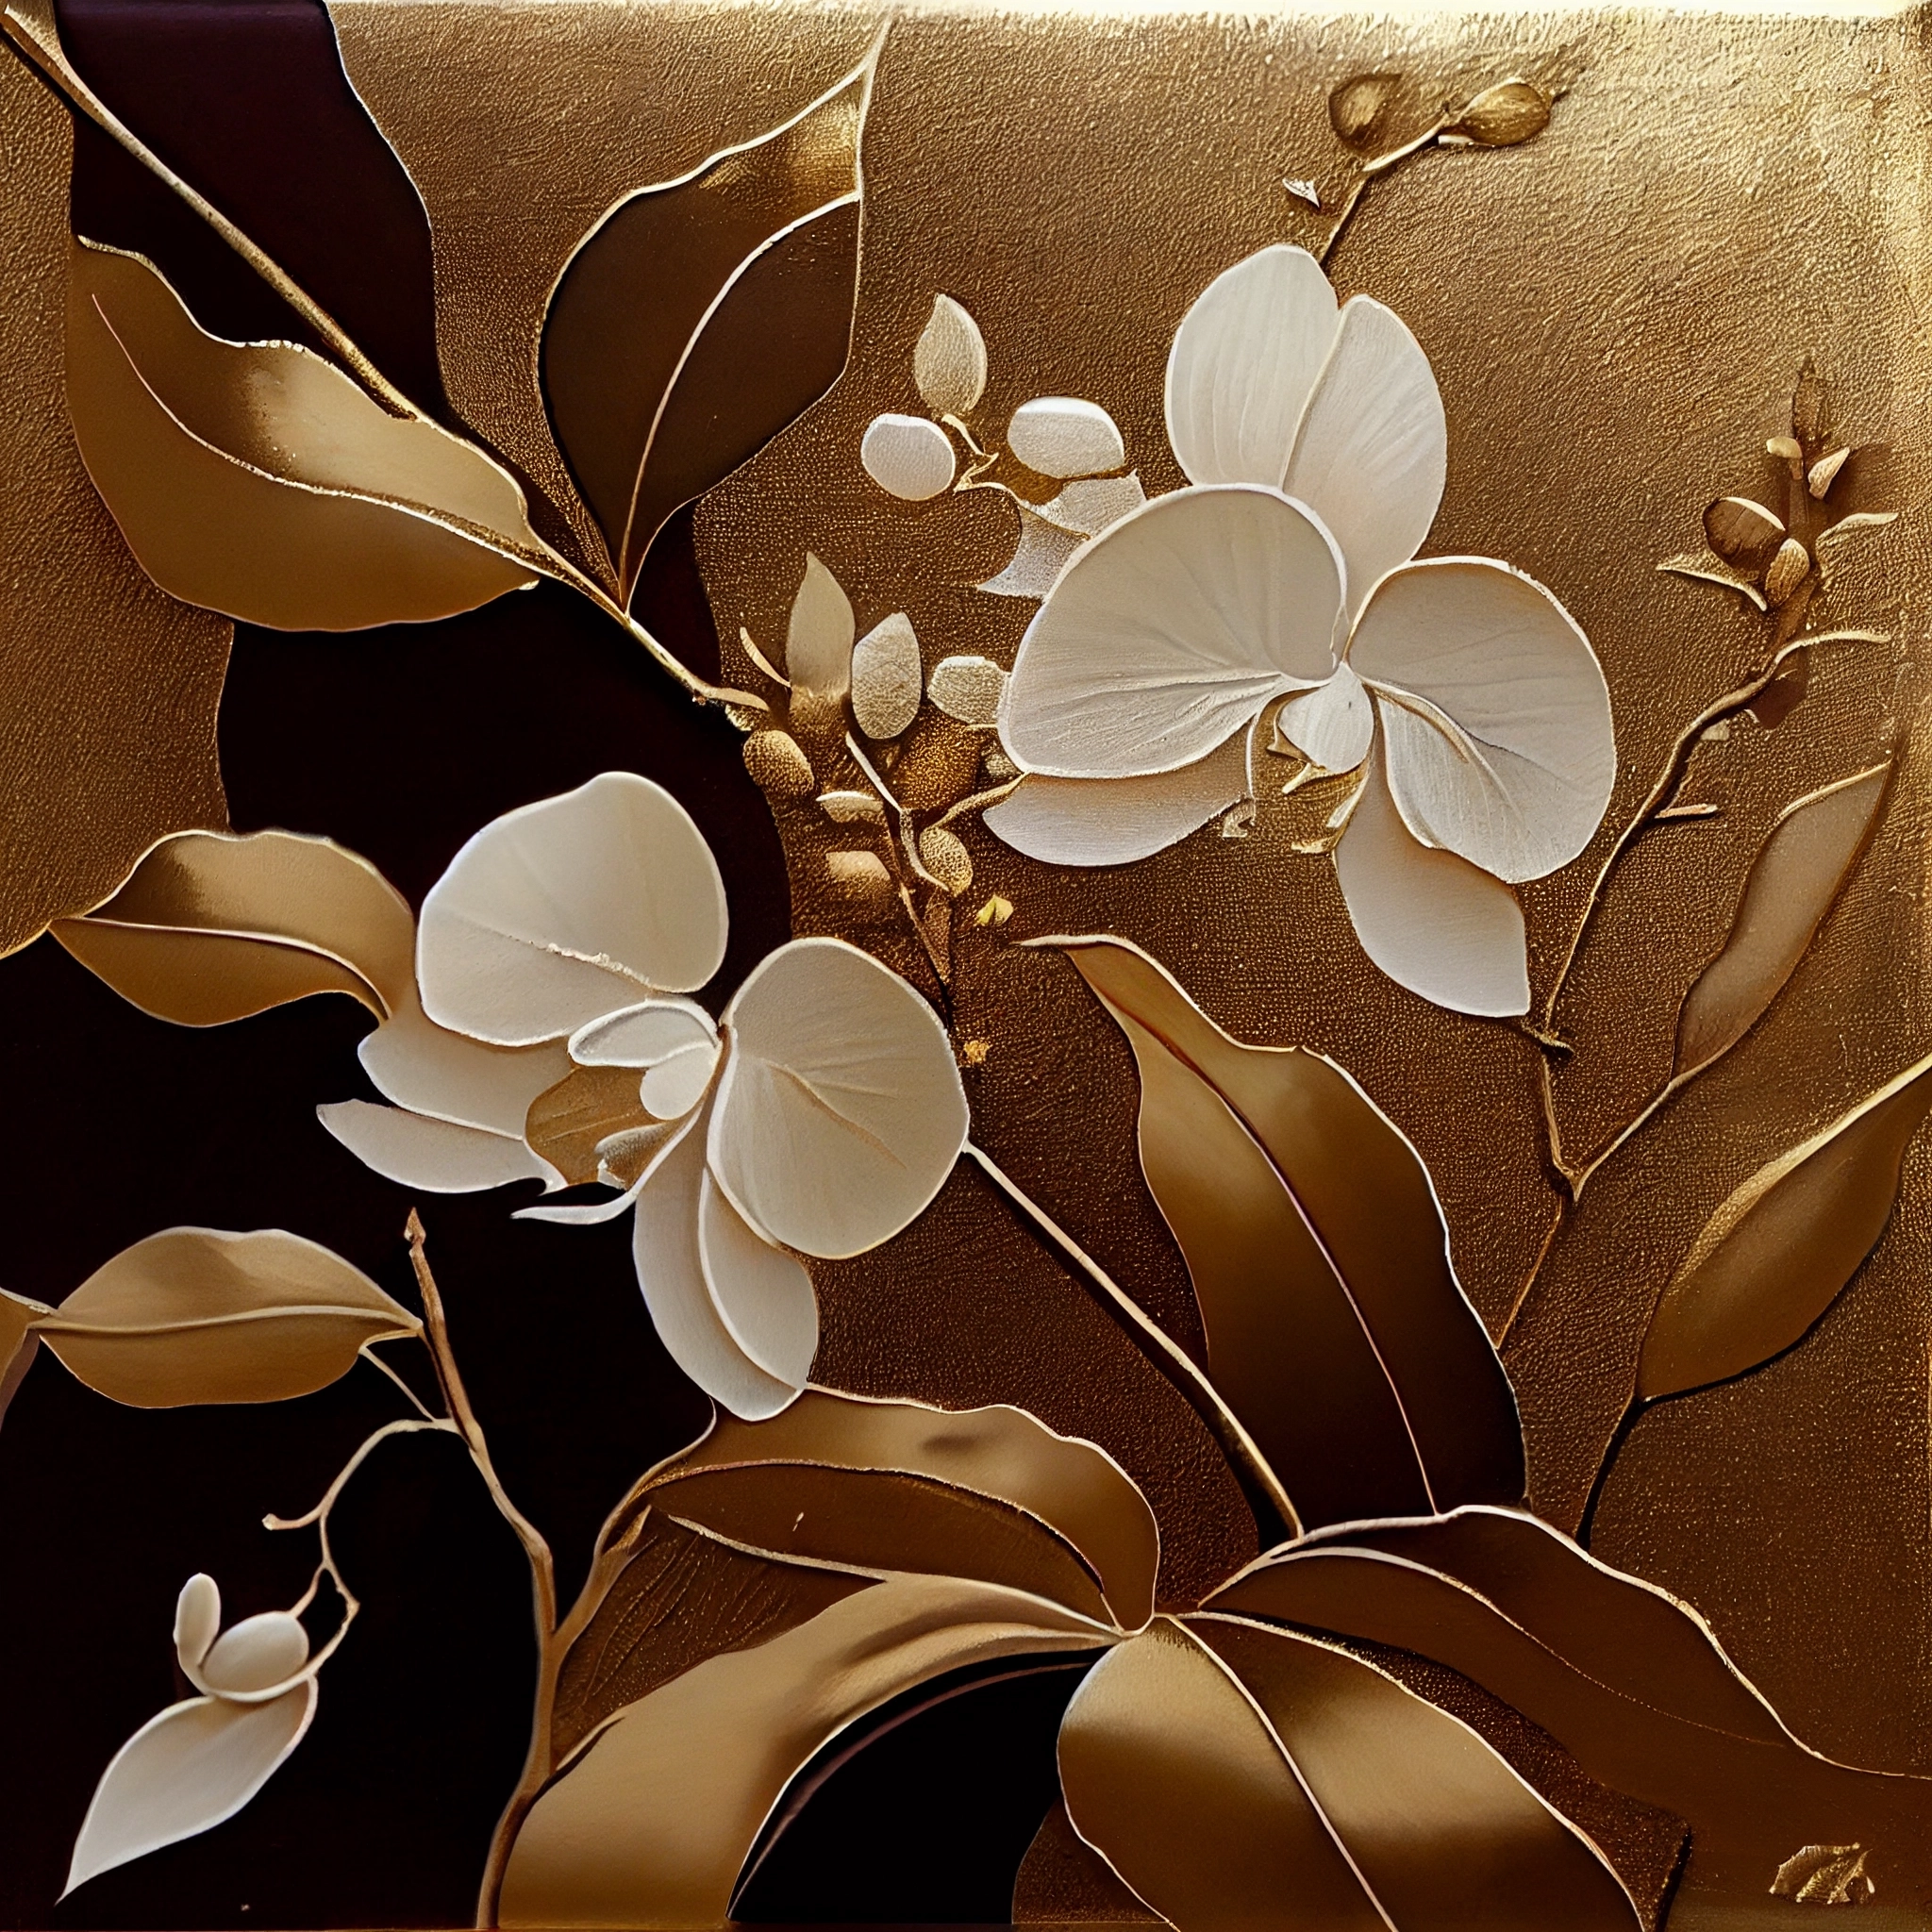 Golden Elegance: White Orchids with Gold Leaf Print